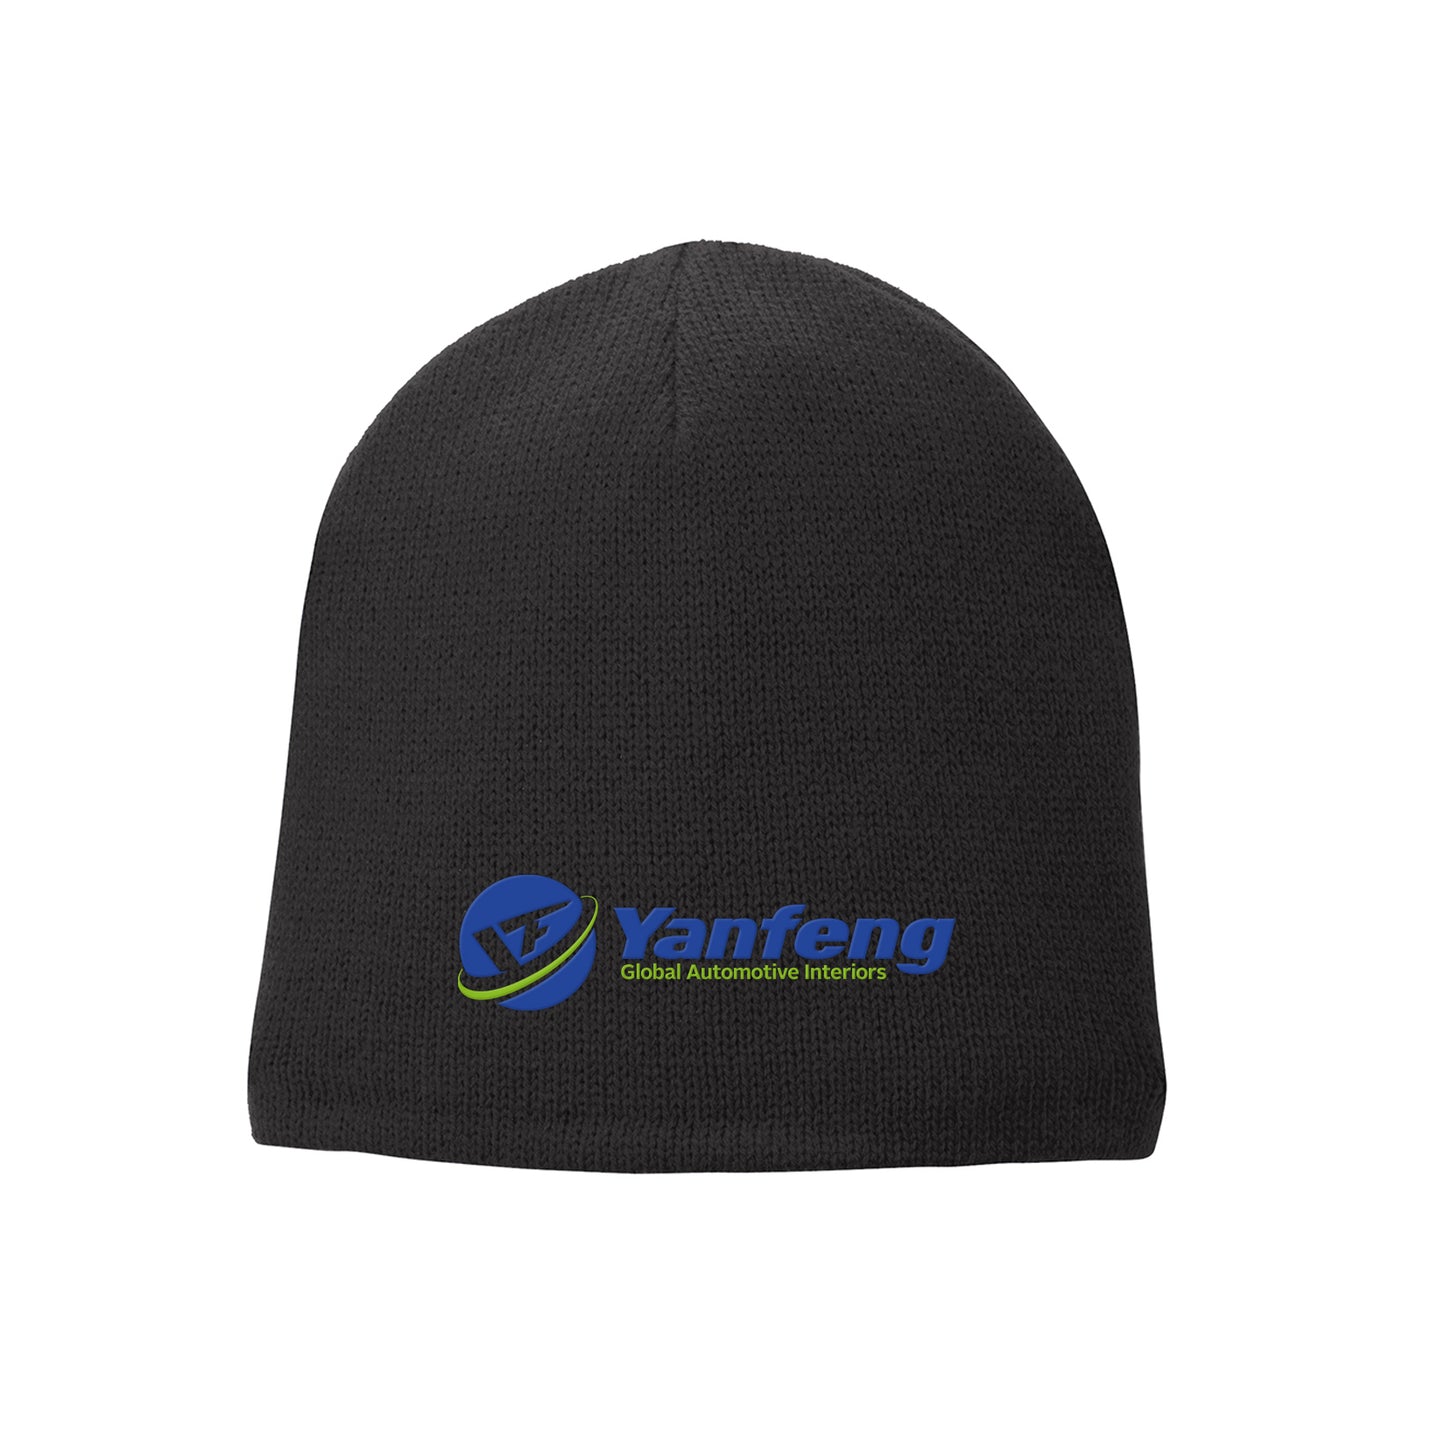 Yanfeng | Fleece-Lined Beanie Cap